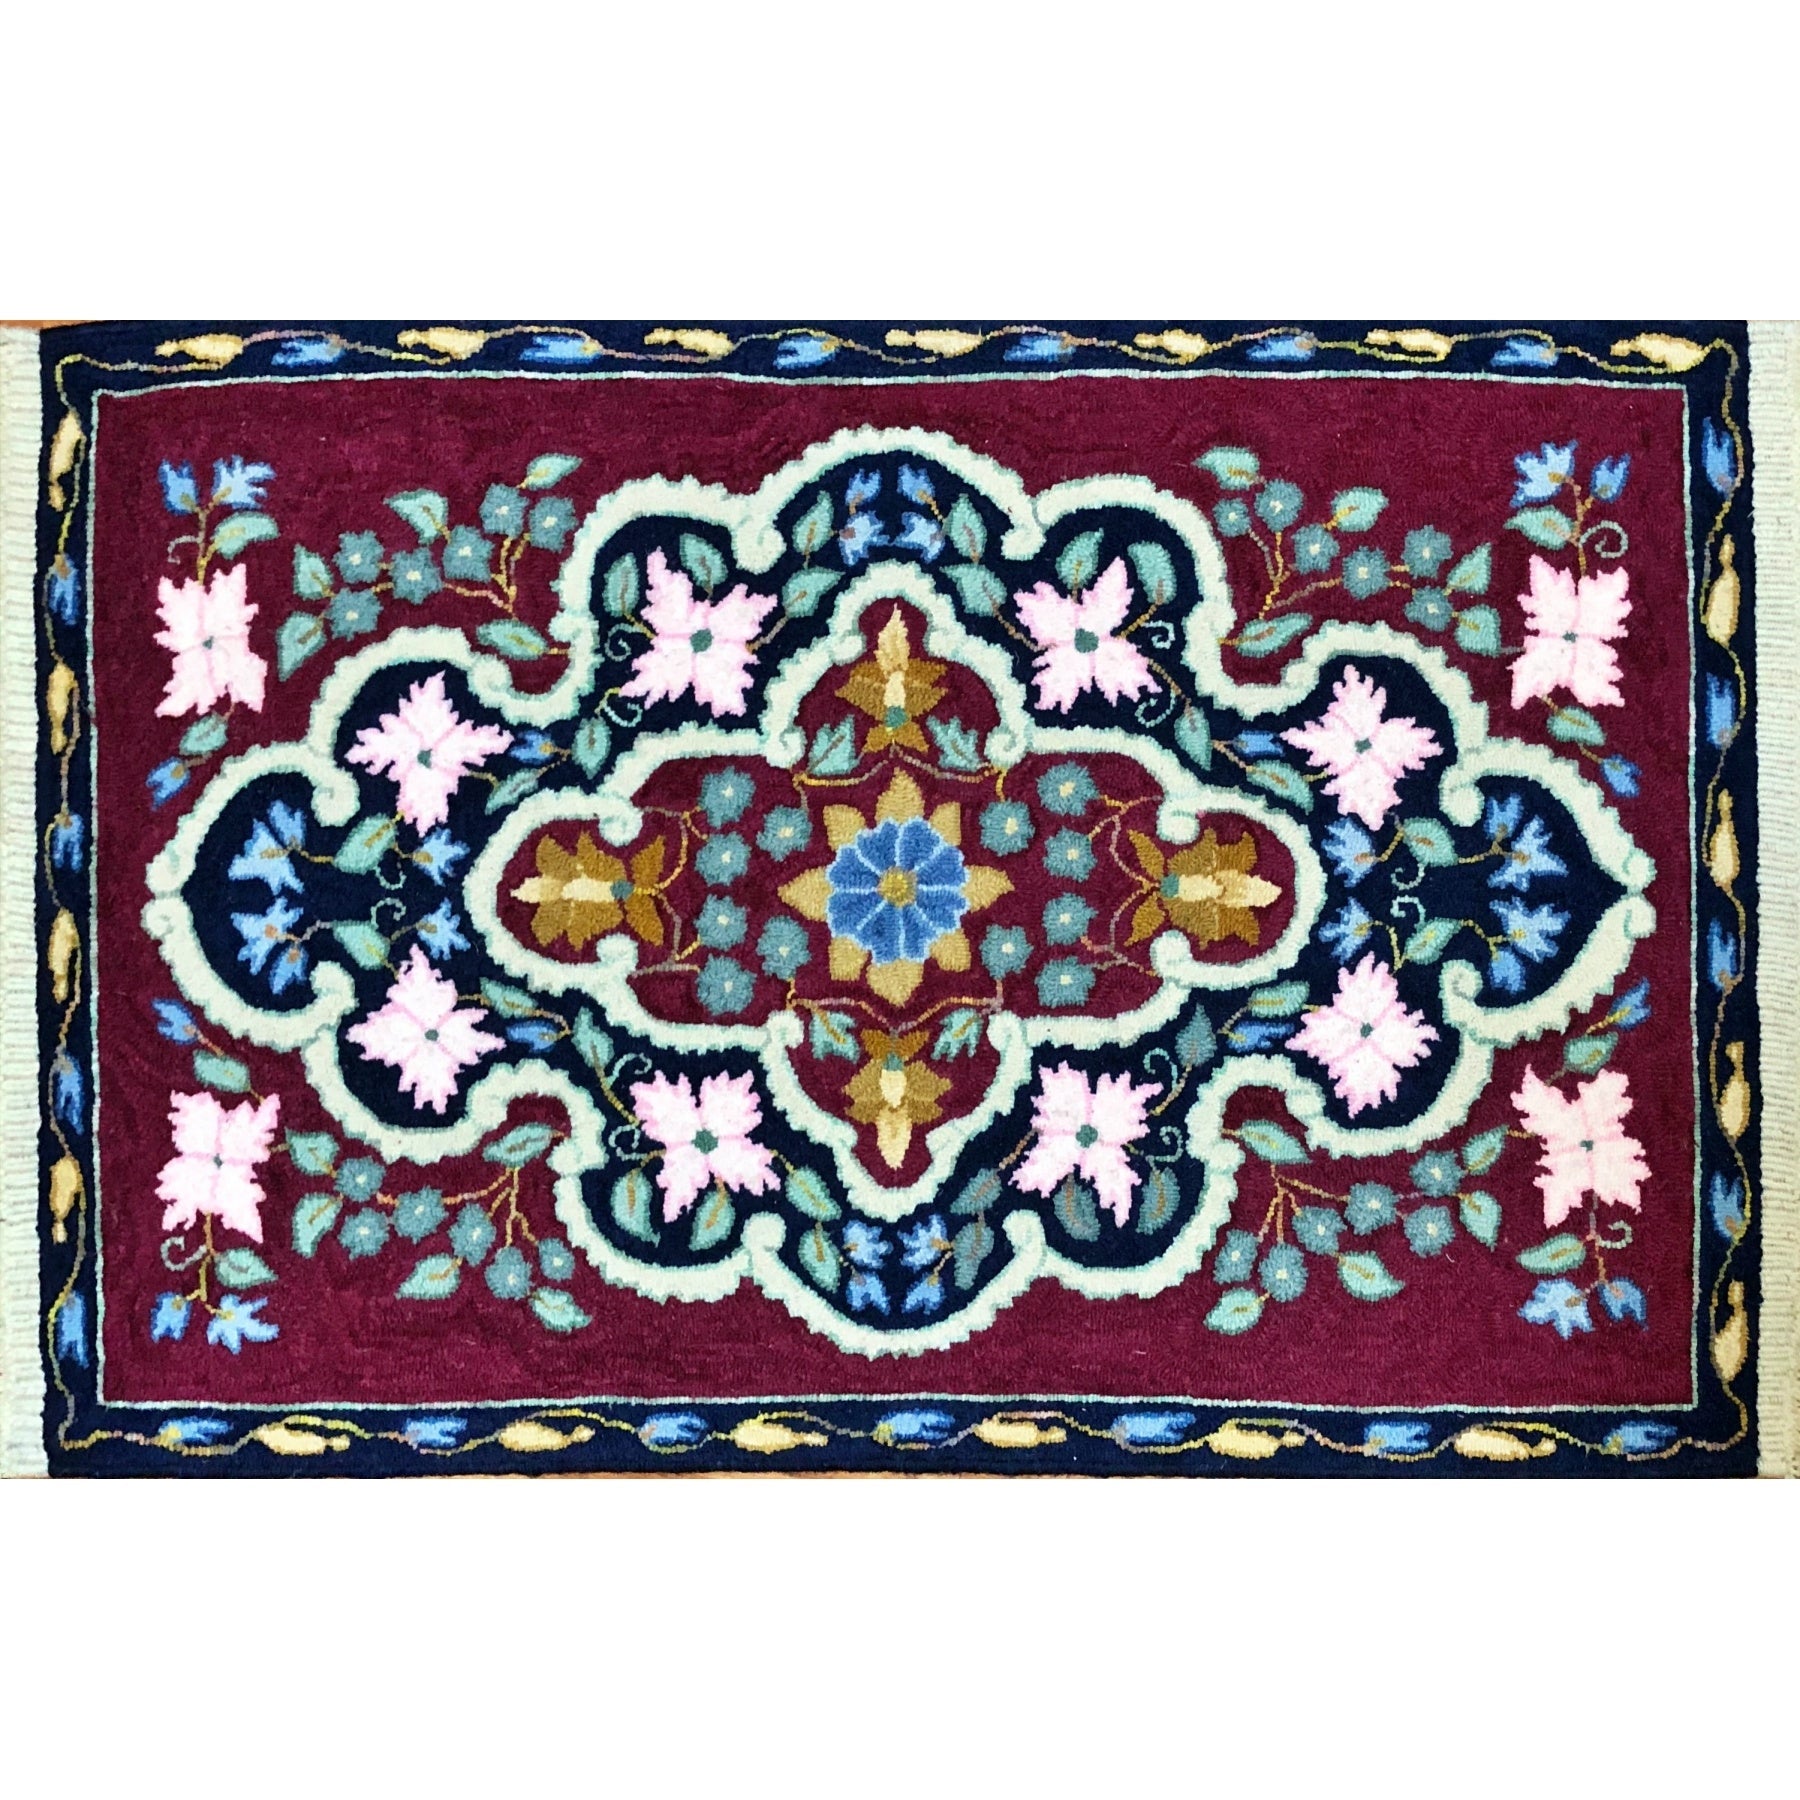 Ali-Riza - Small Center, rug hooked by Carol LaChance